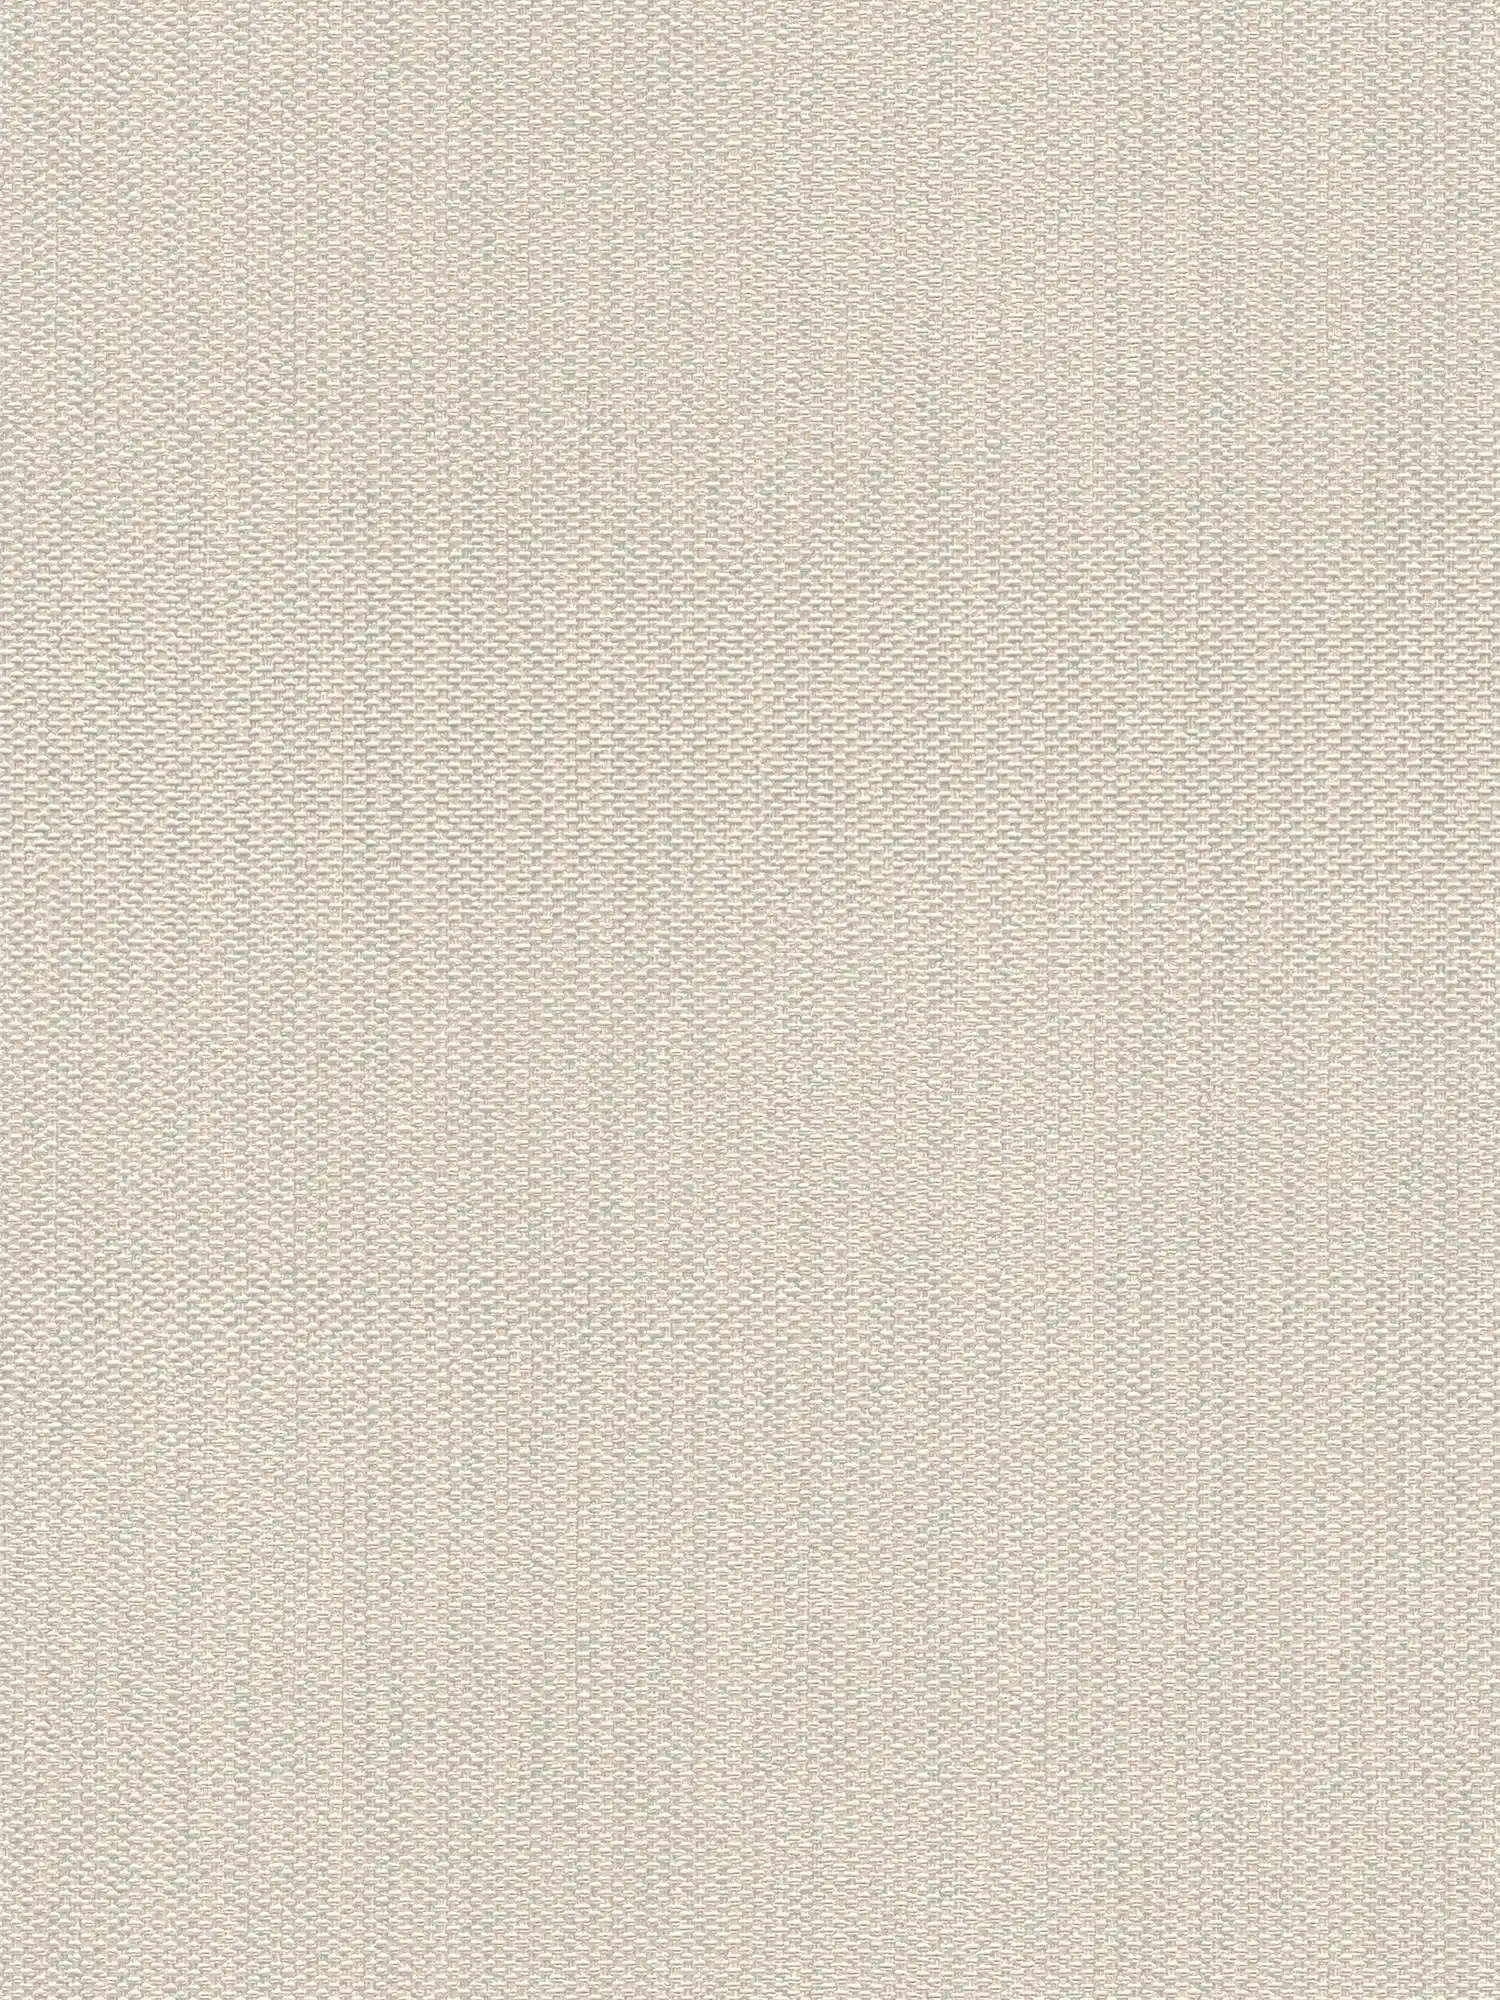 Carta da parati non tessuta in look tessile - crema, grigio
